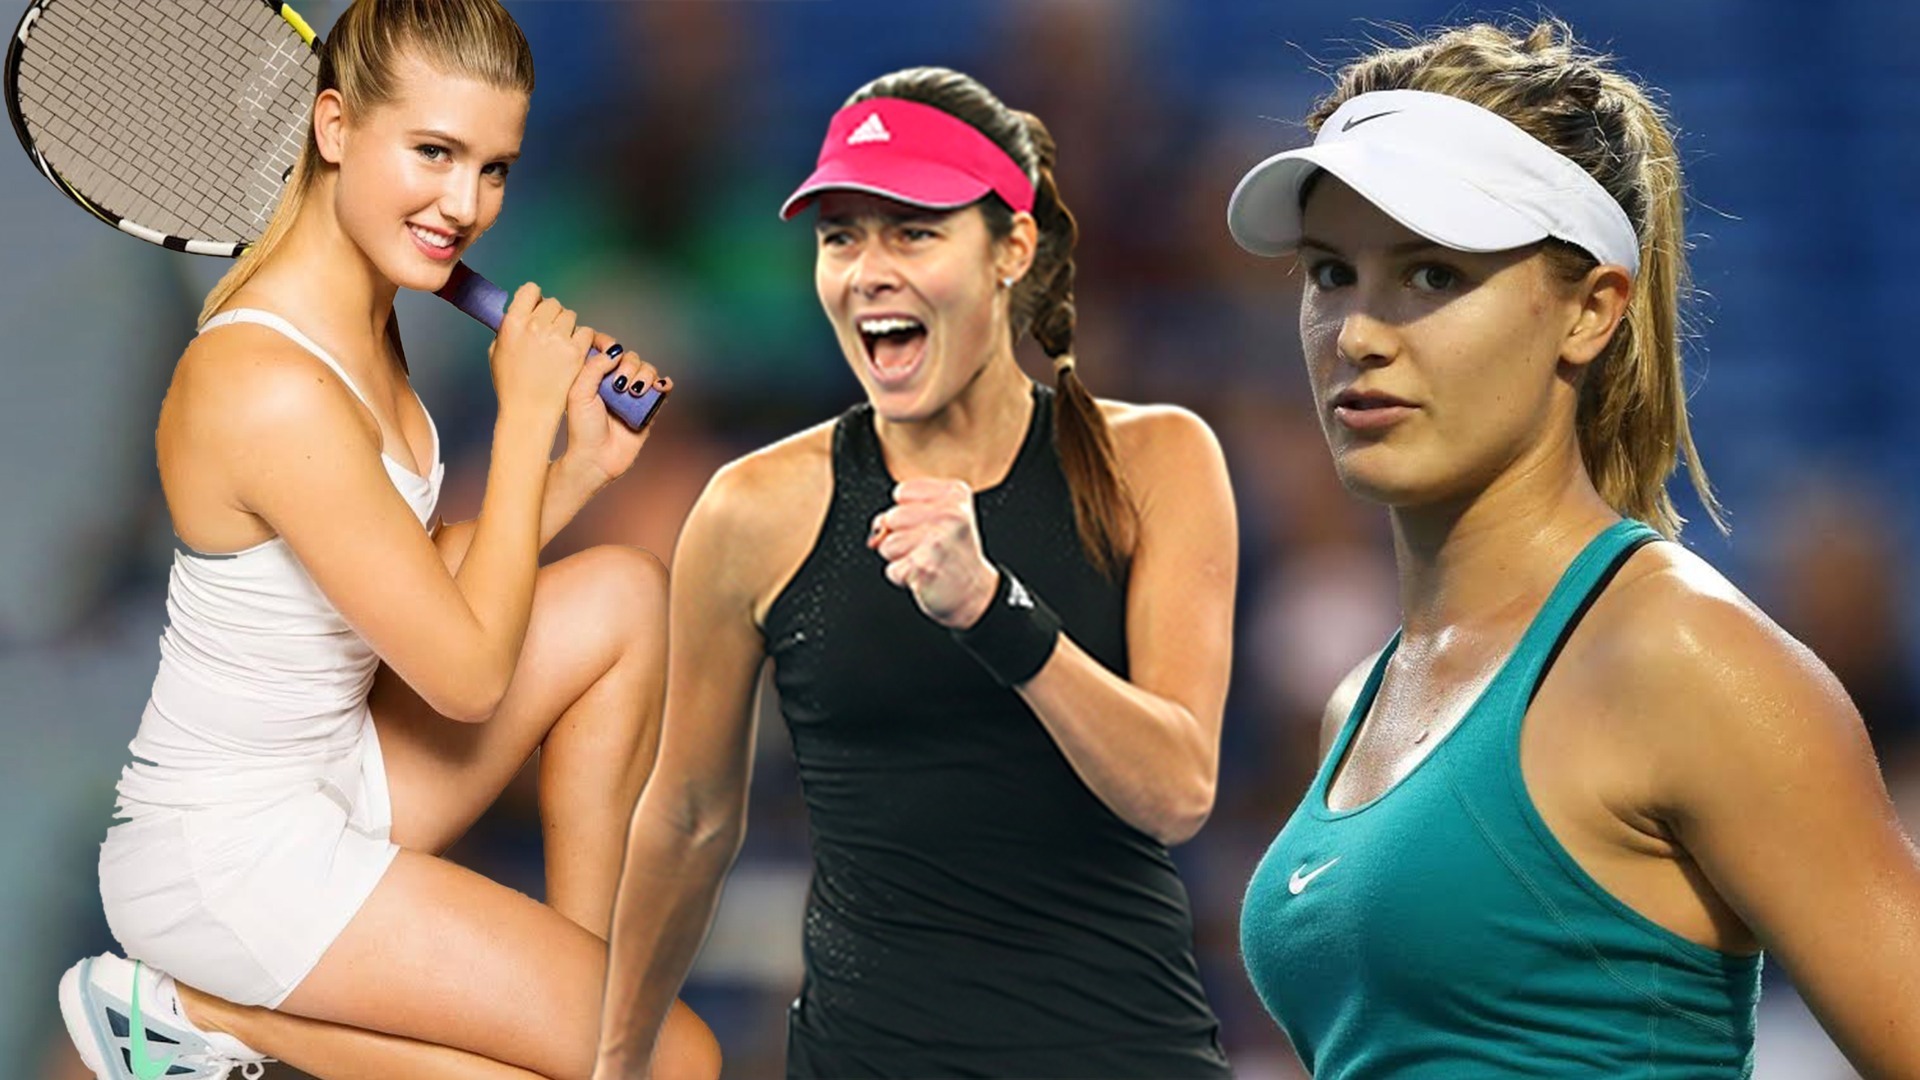 Top 10 beautiful female tennis players